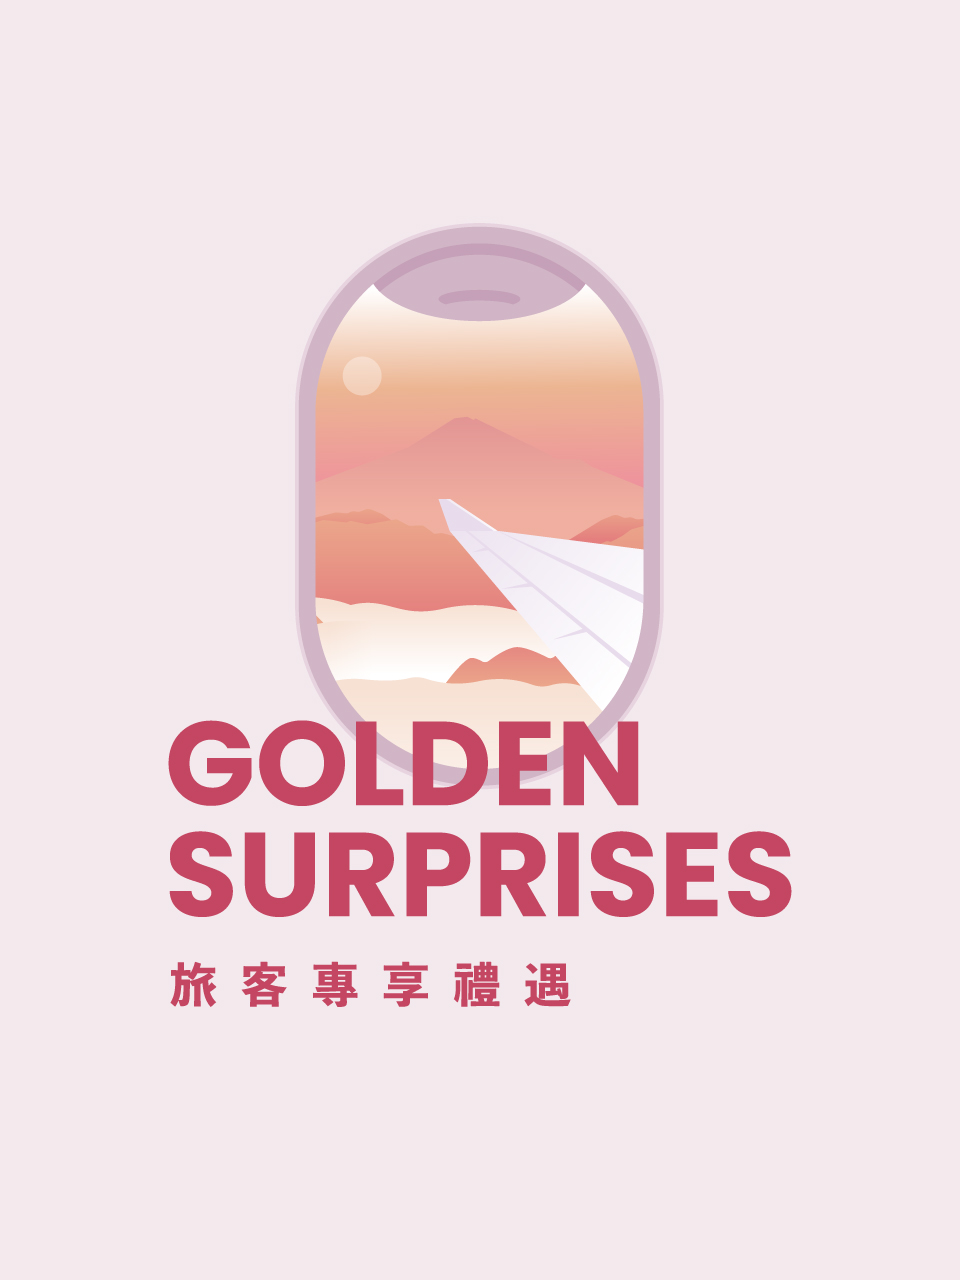 Golden Surprises - Hong Kong Times Square